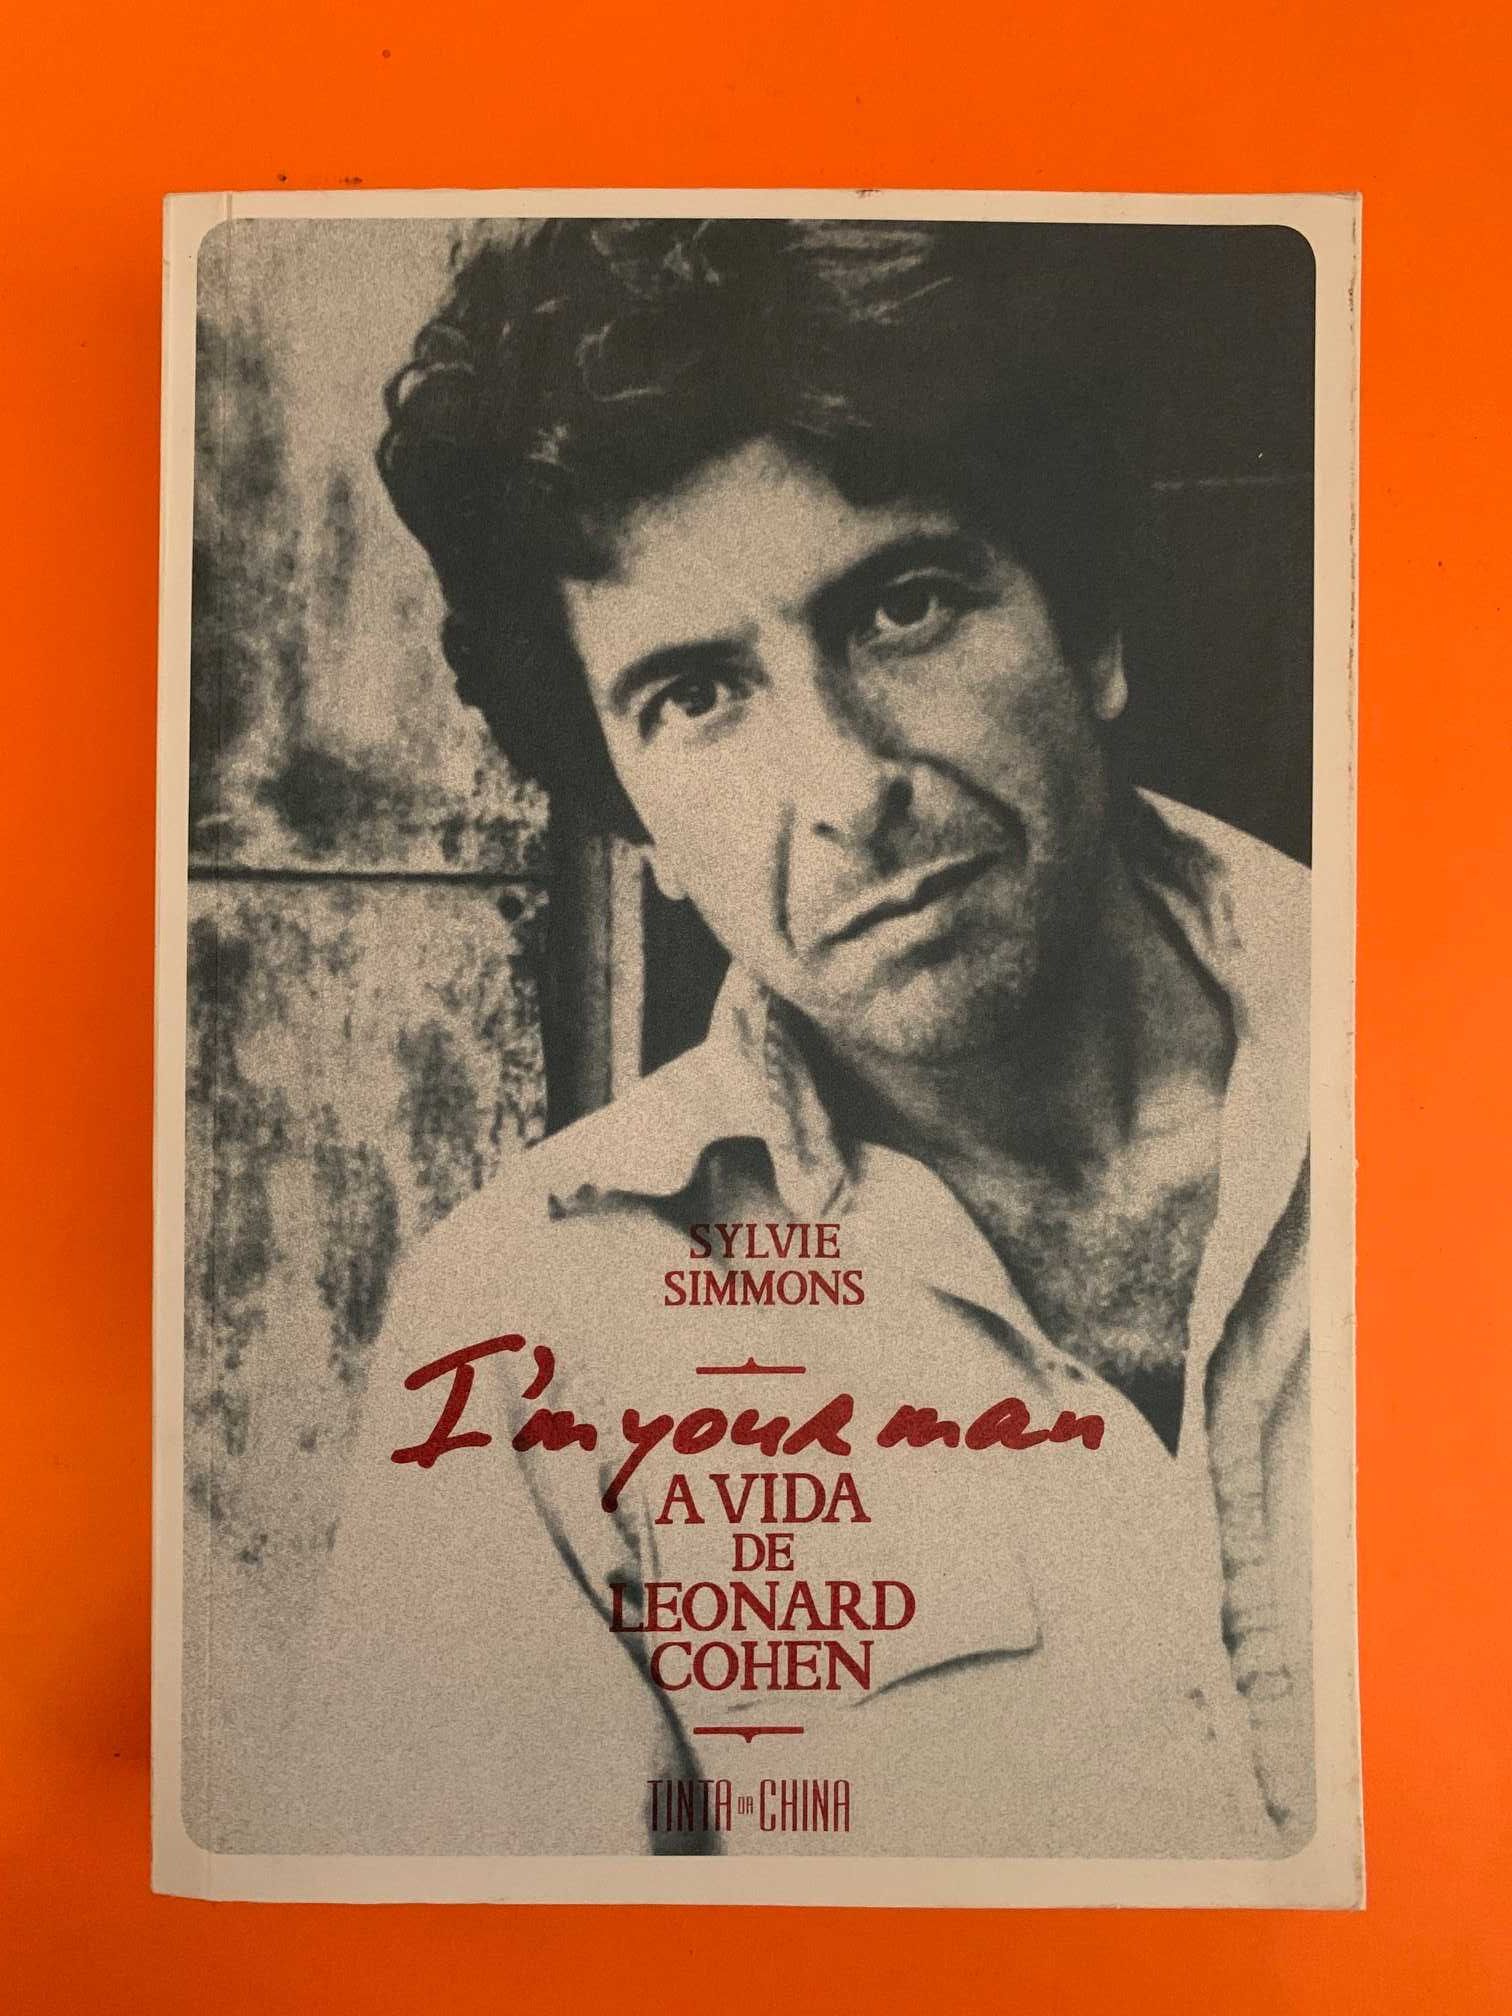 I’m Your Man: A Vida De Leonard Cohen - Sylvie Simmons